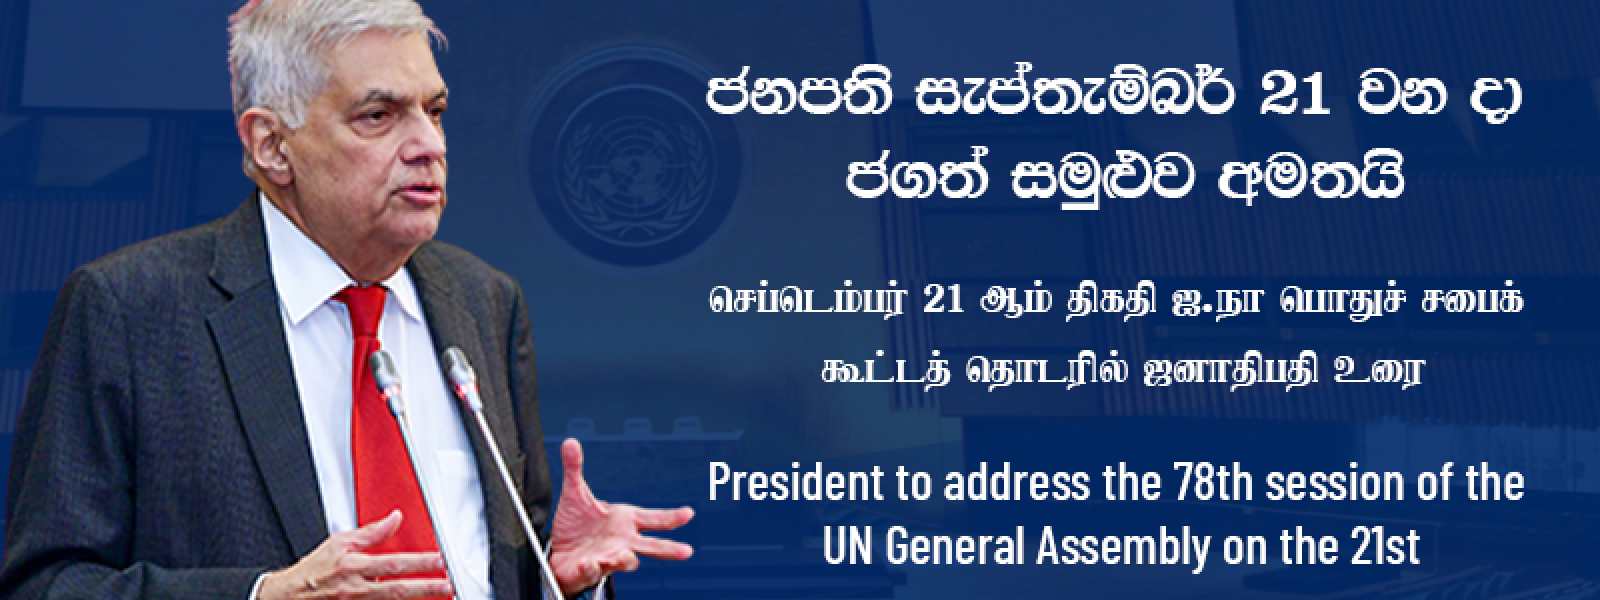 President to address 78th UNGA on 21st Sept.